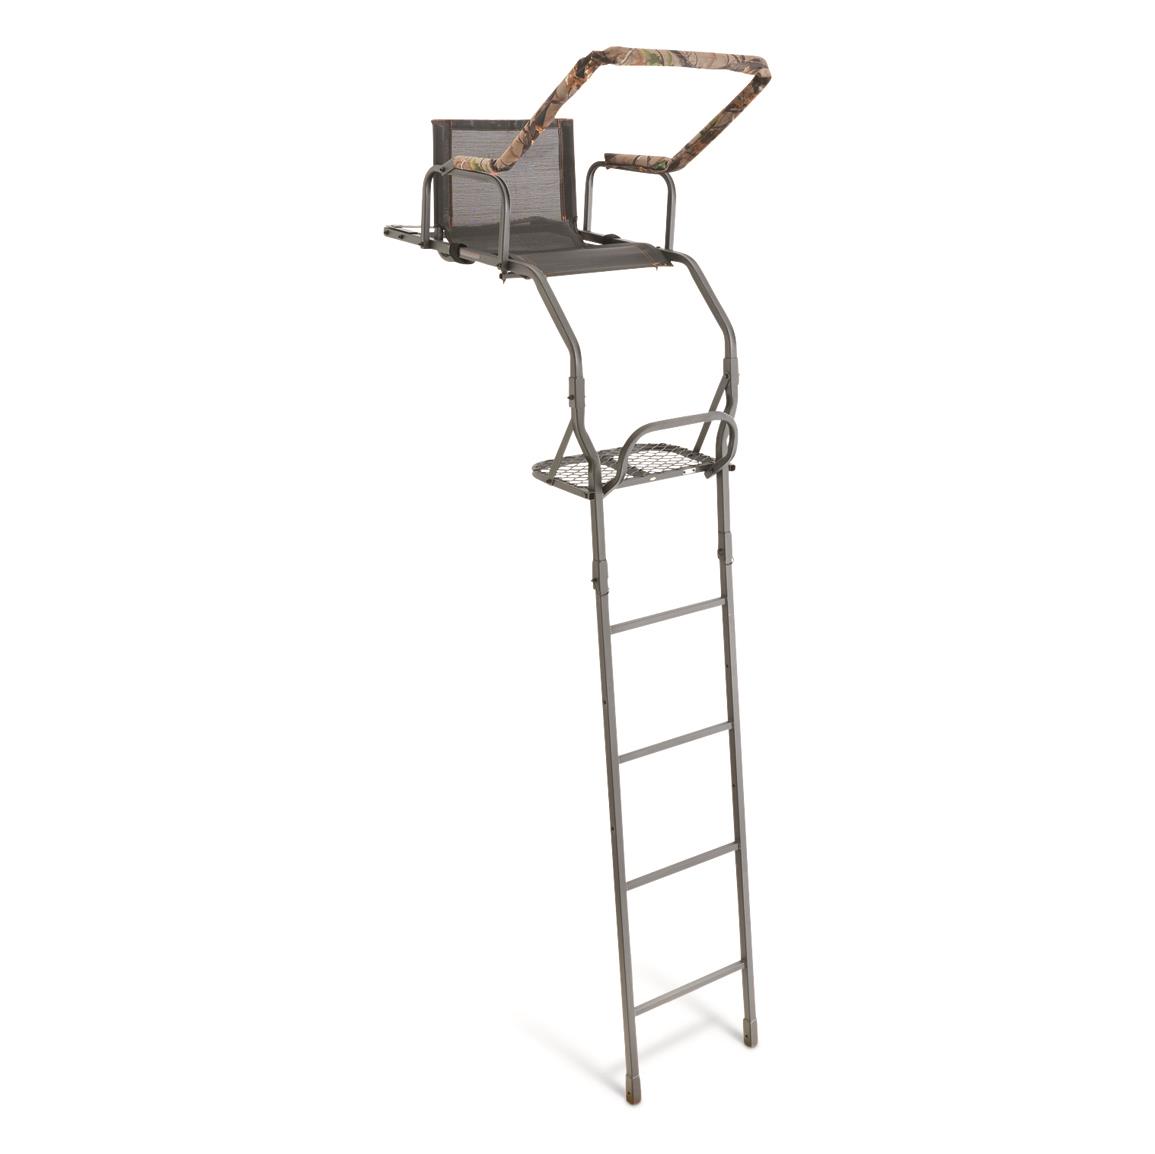 Guide Gear 16in Swivel Ladder Tree Stand for sale online 